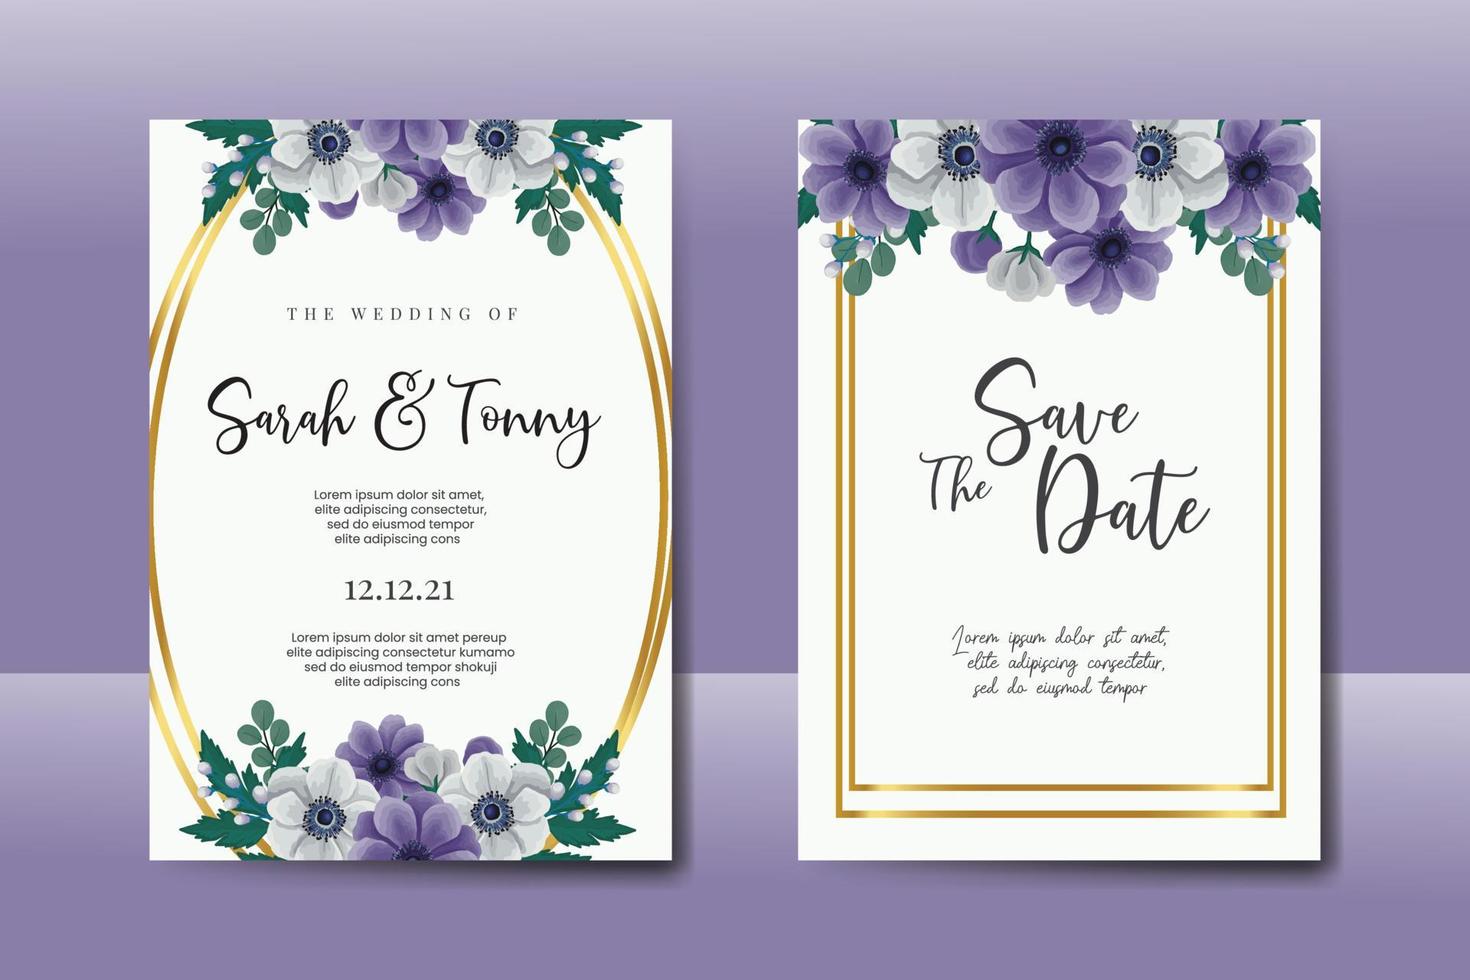 Wedding invitation frame set, floral watercolor Digital hand drawn Anemone flower design Invitation Card Template vector